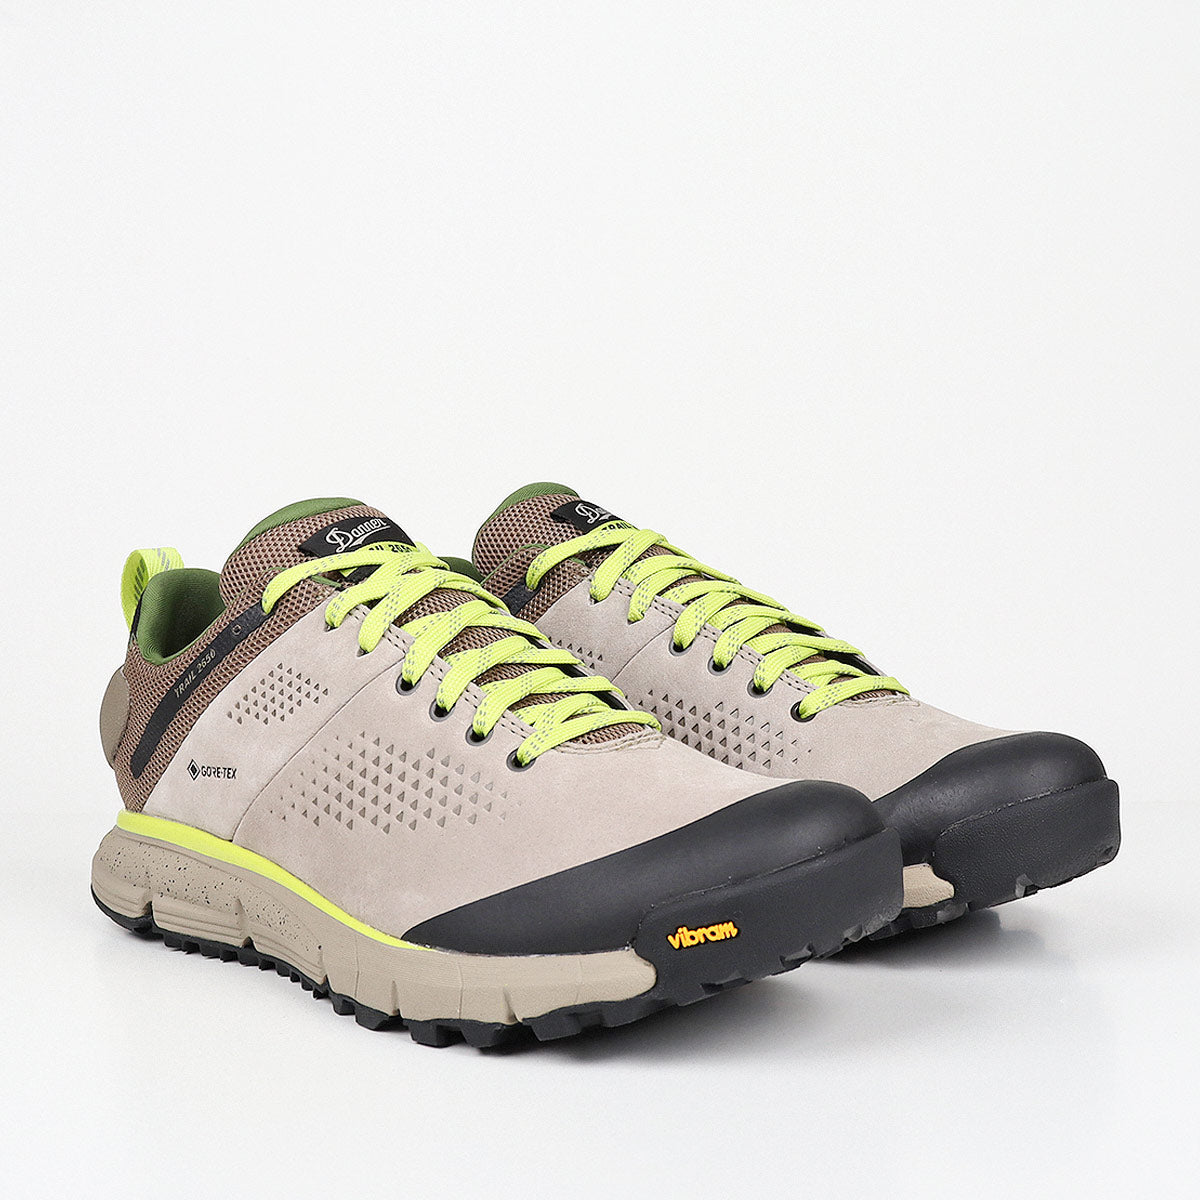 Danner Trail 2650 3" GTX Shoes - D Standard Fit, Tan Meadow Greens GTX, Detail Shot 2